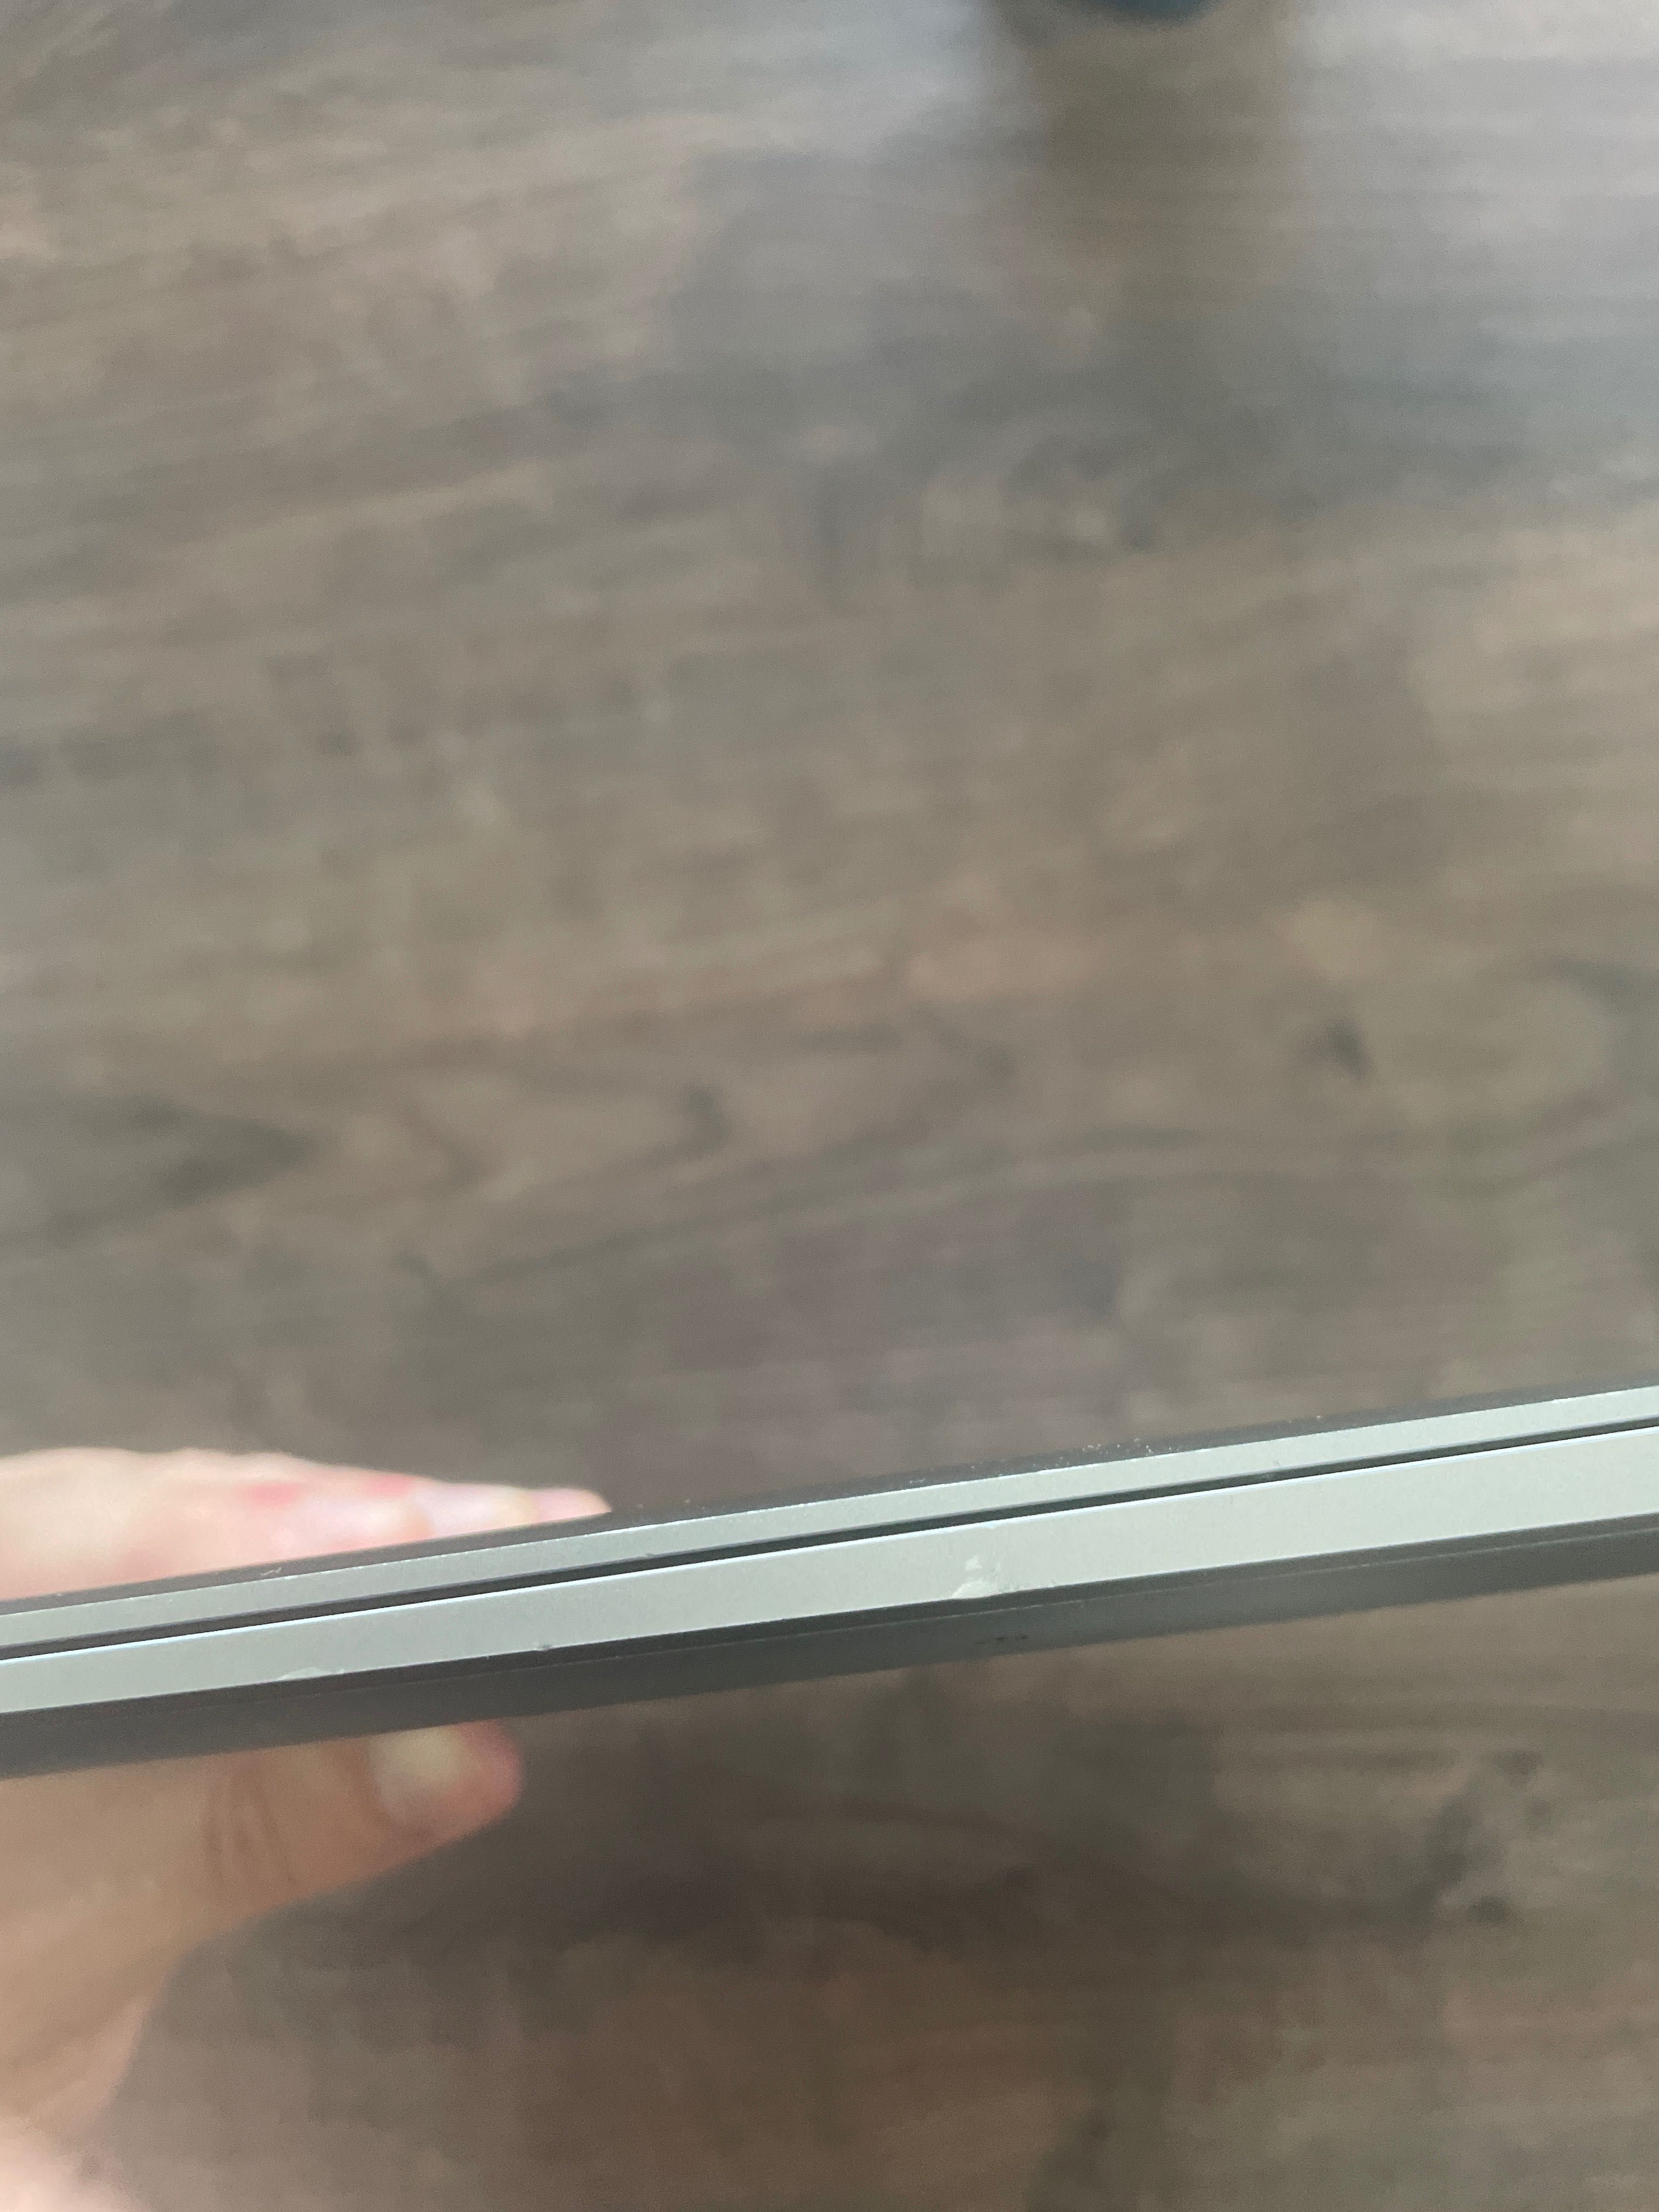 MacBook Air 13-inch 2018